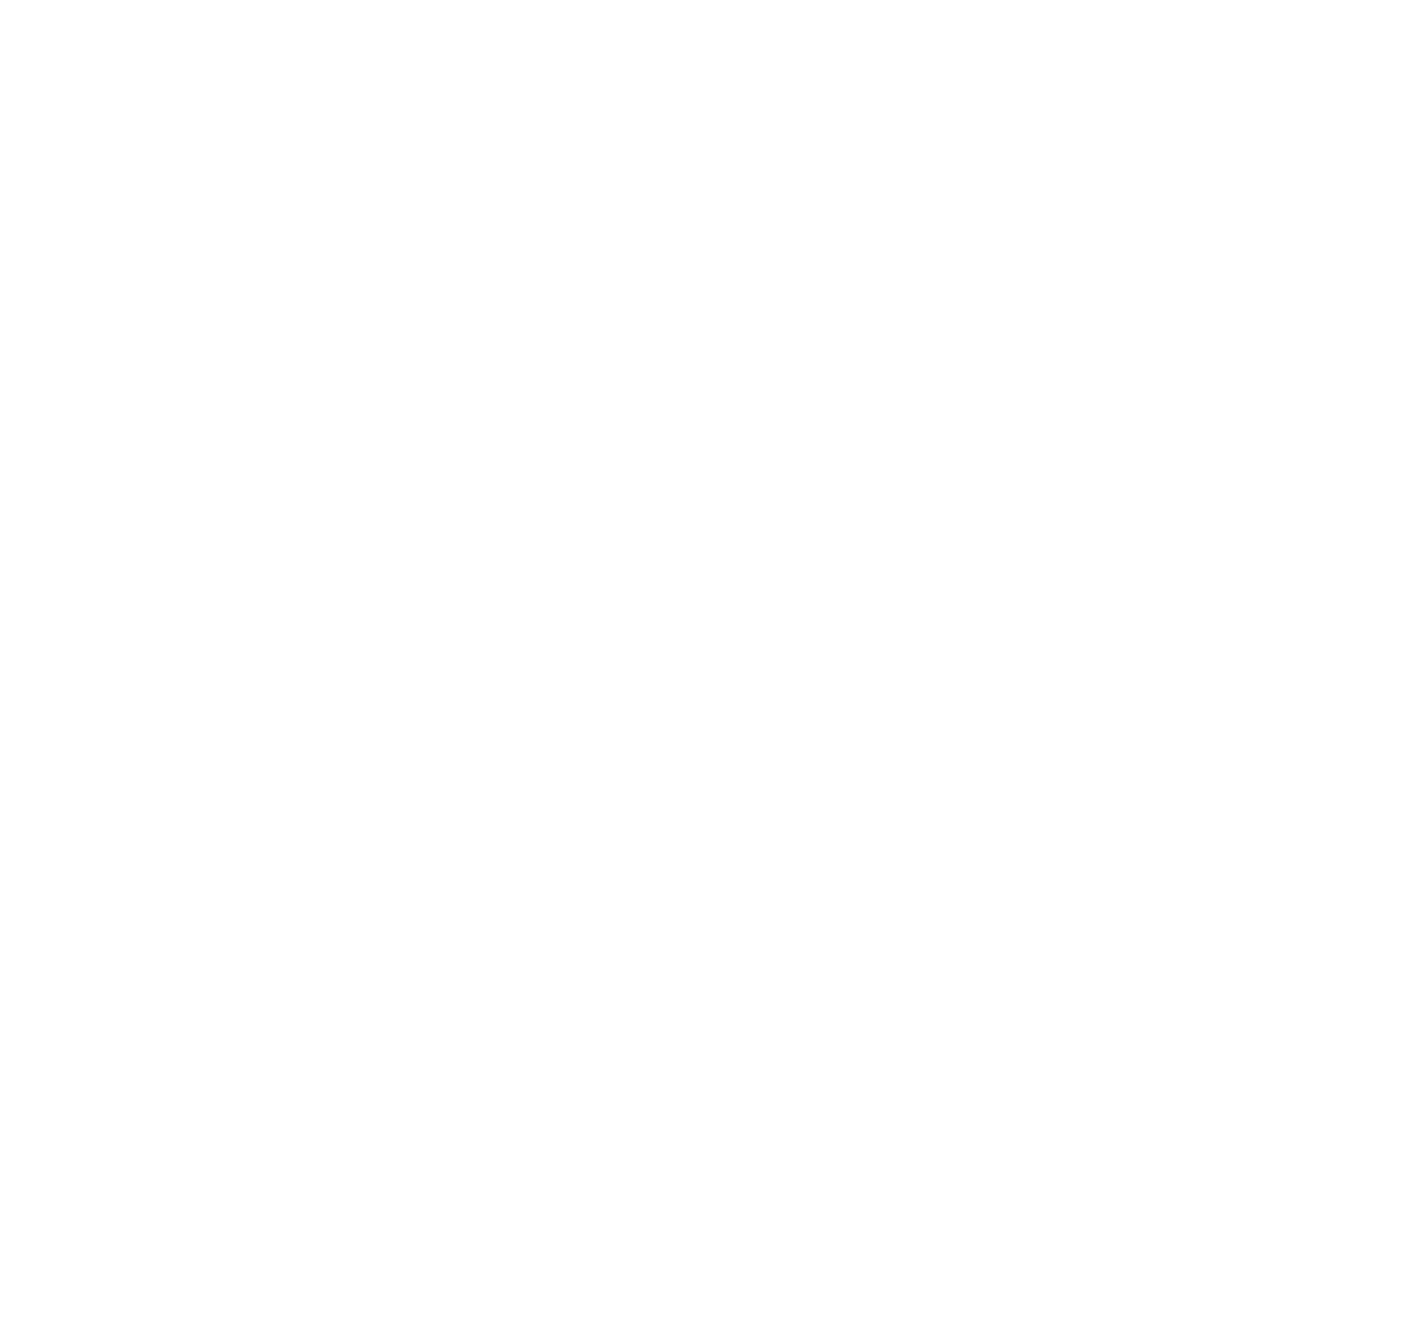 Gulf International Services logo for dark backgrounds (transparent PNG)